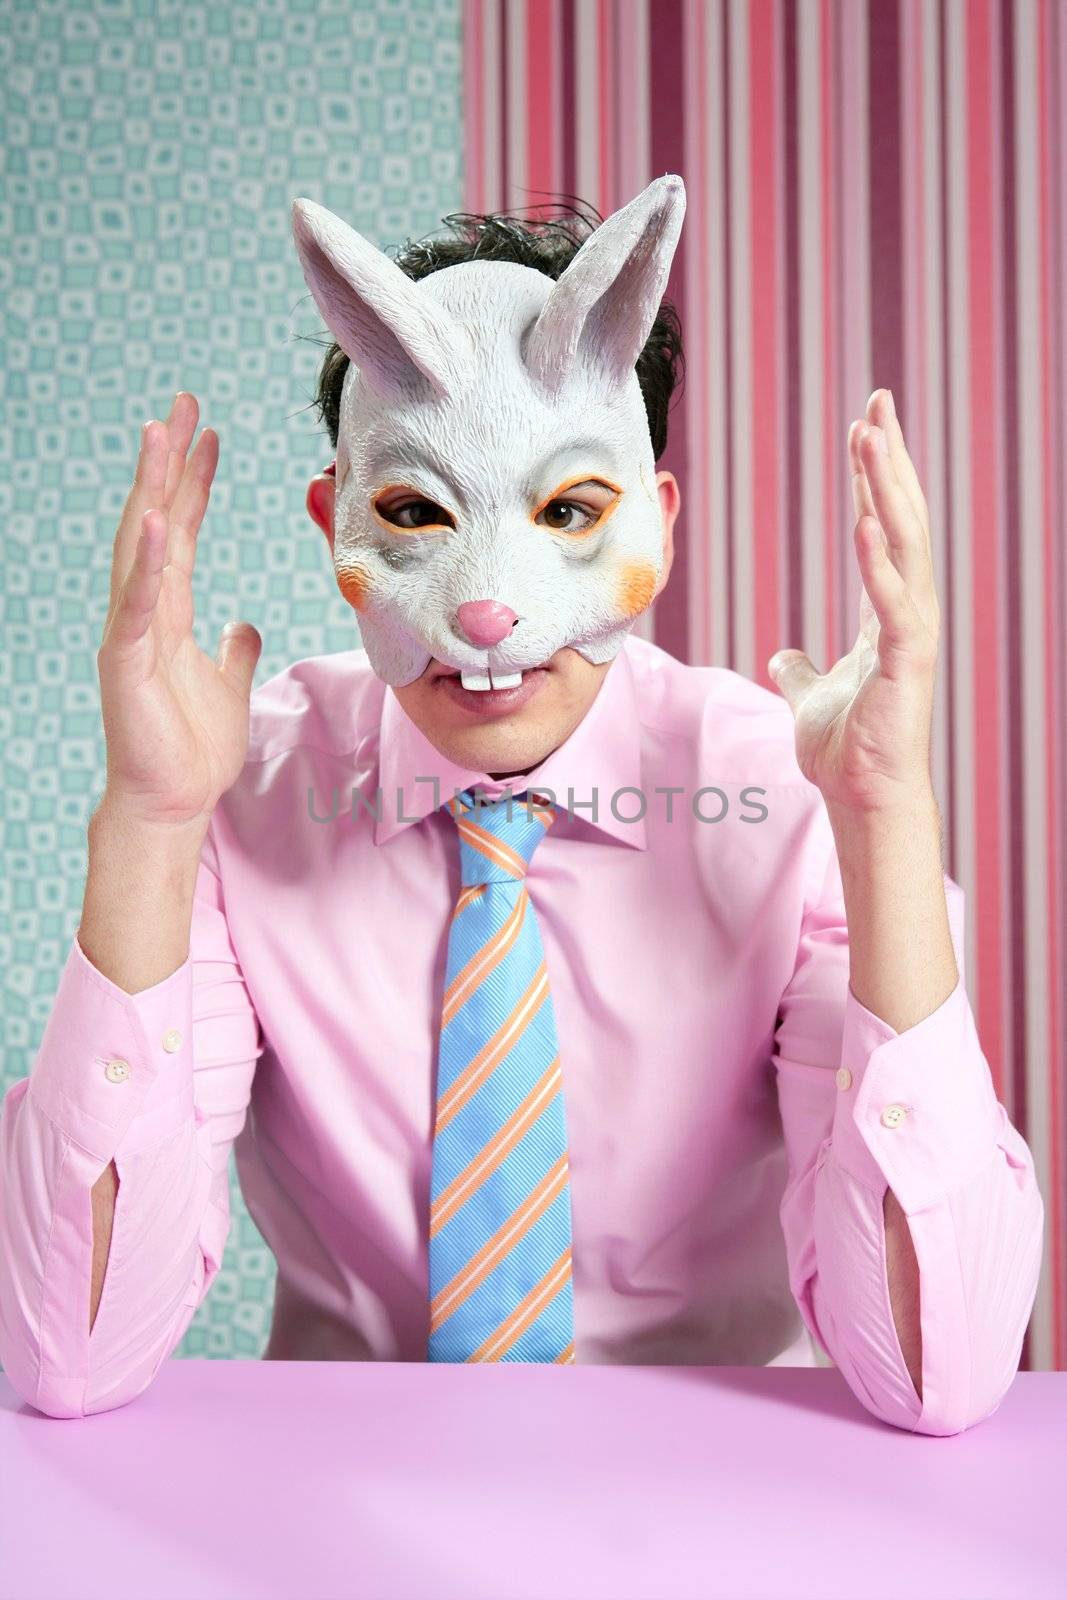 Businessman with funny rabbit mask by lunamarina